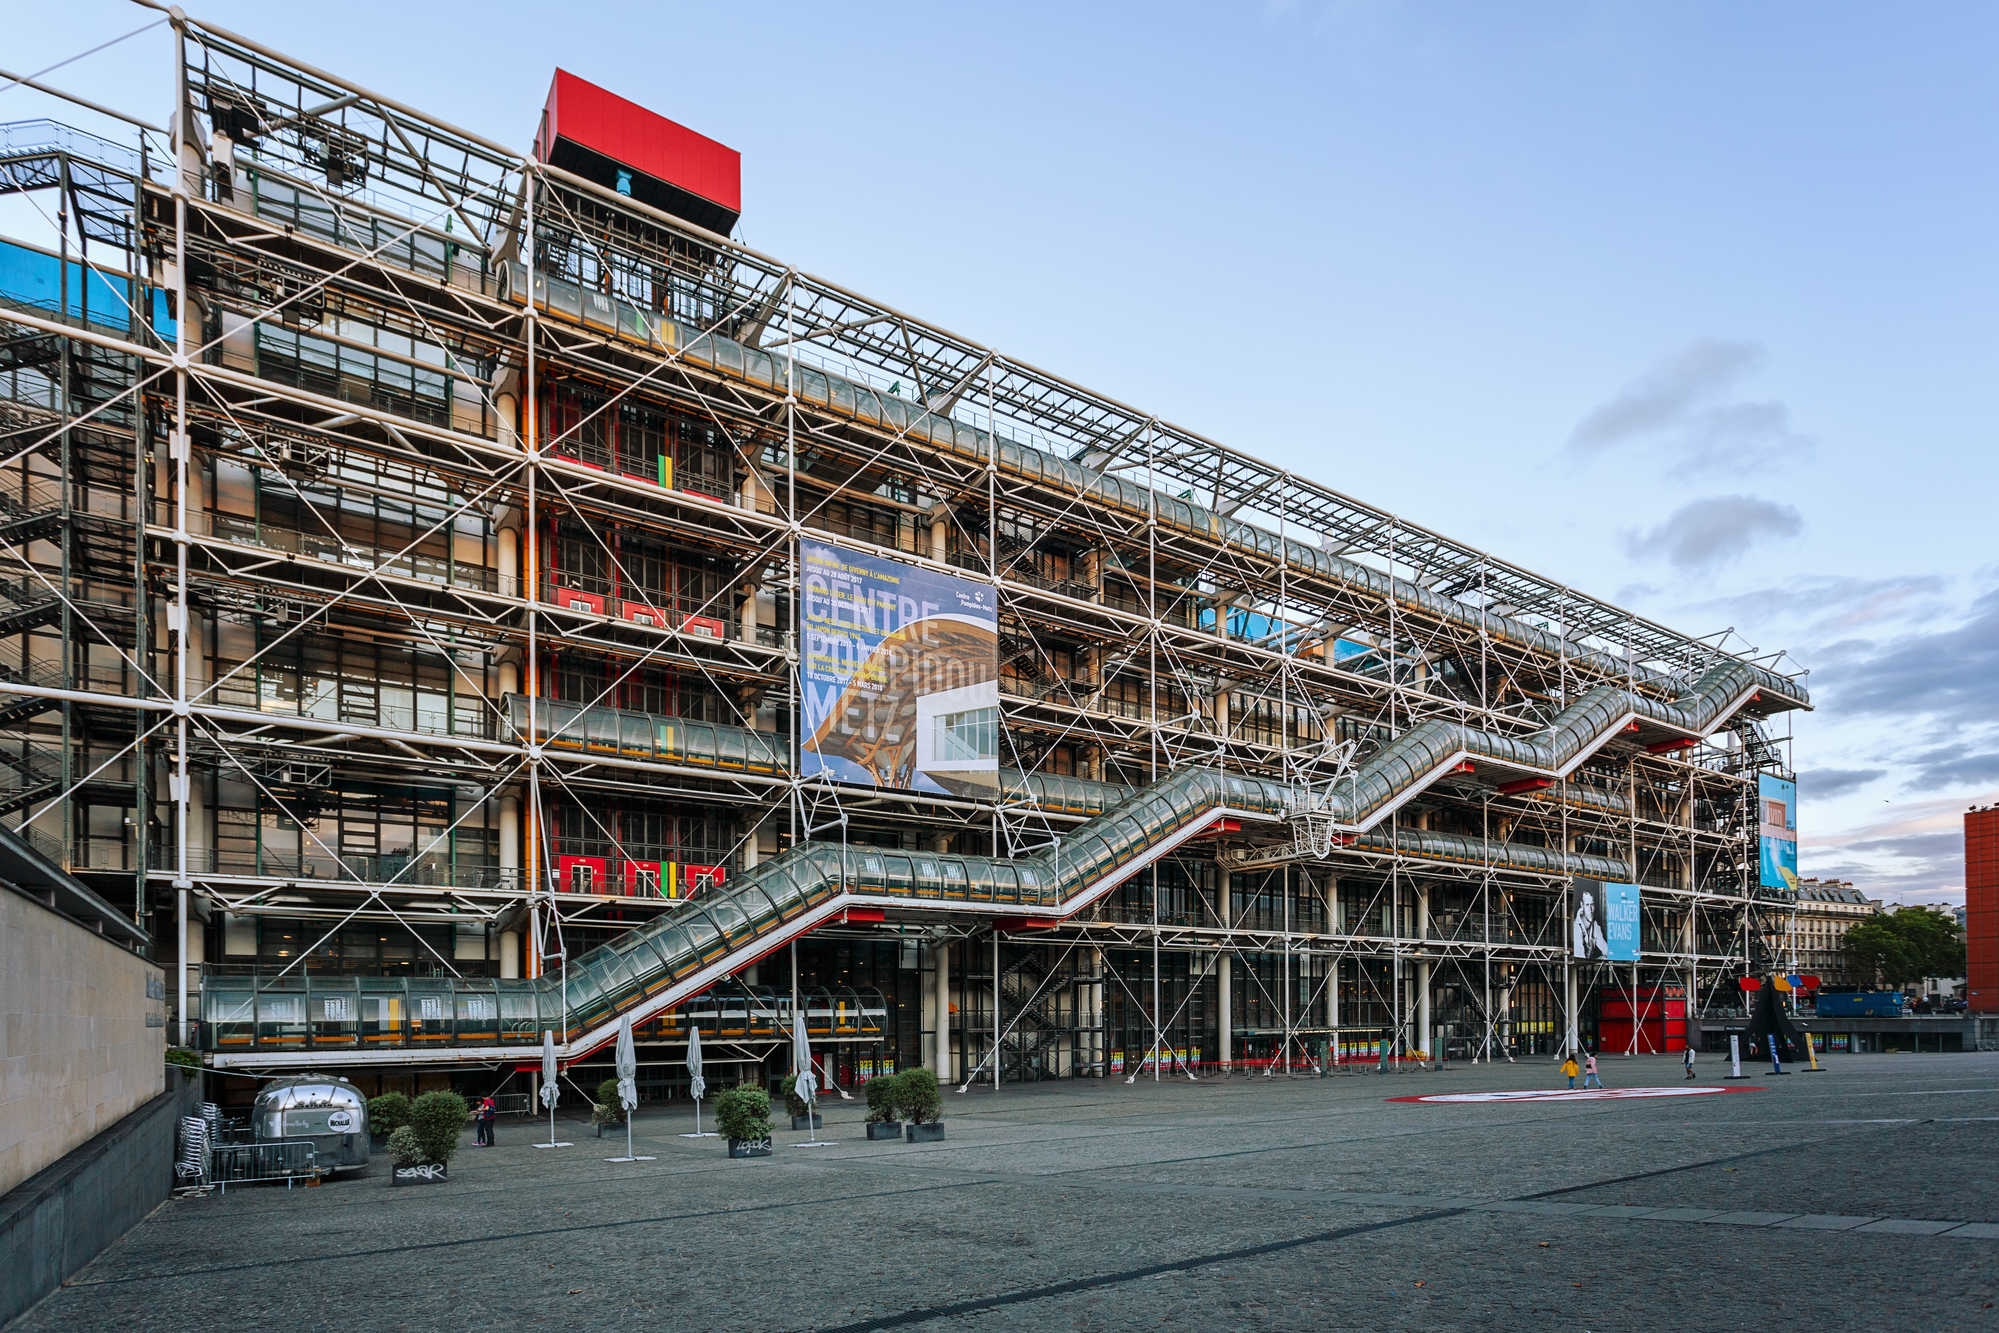 Georges Pompidou Centre